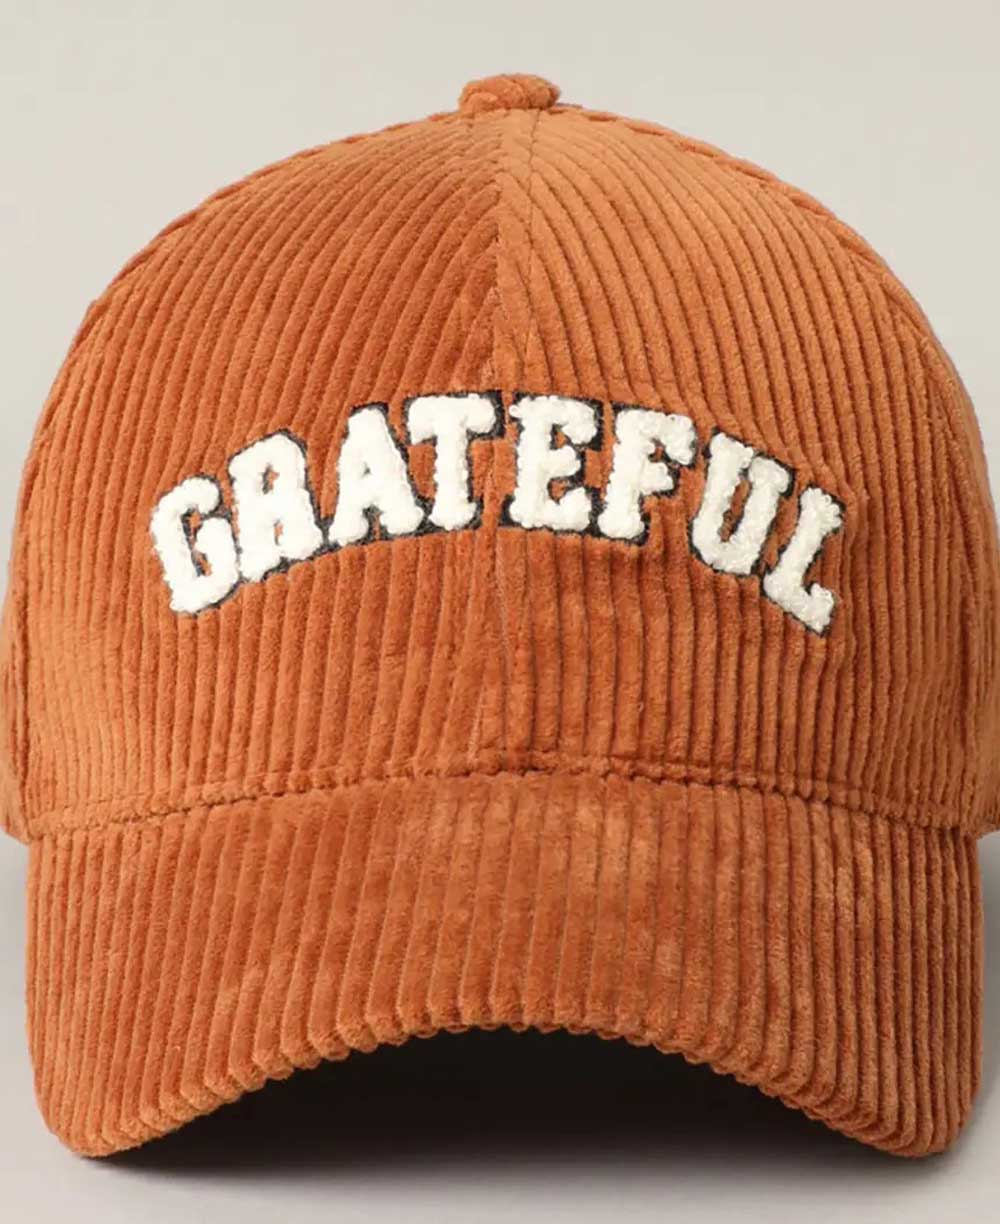 Grateful Embroidered Baseball Cap - Cap Rust